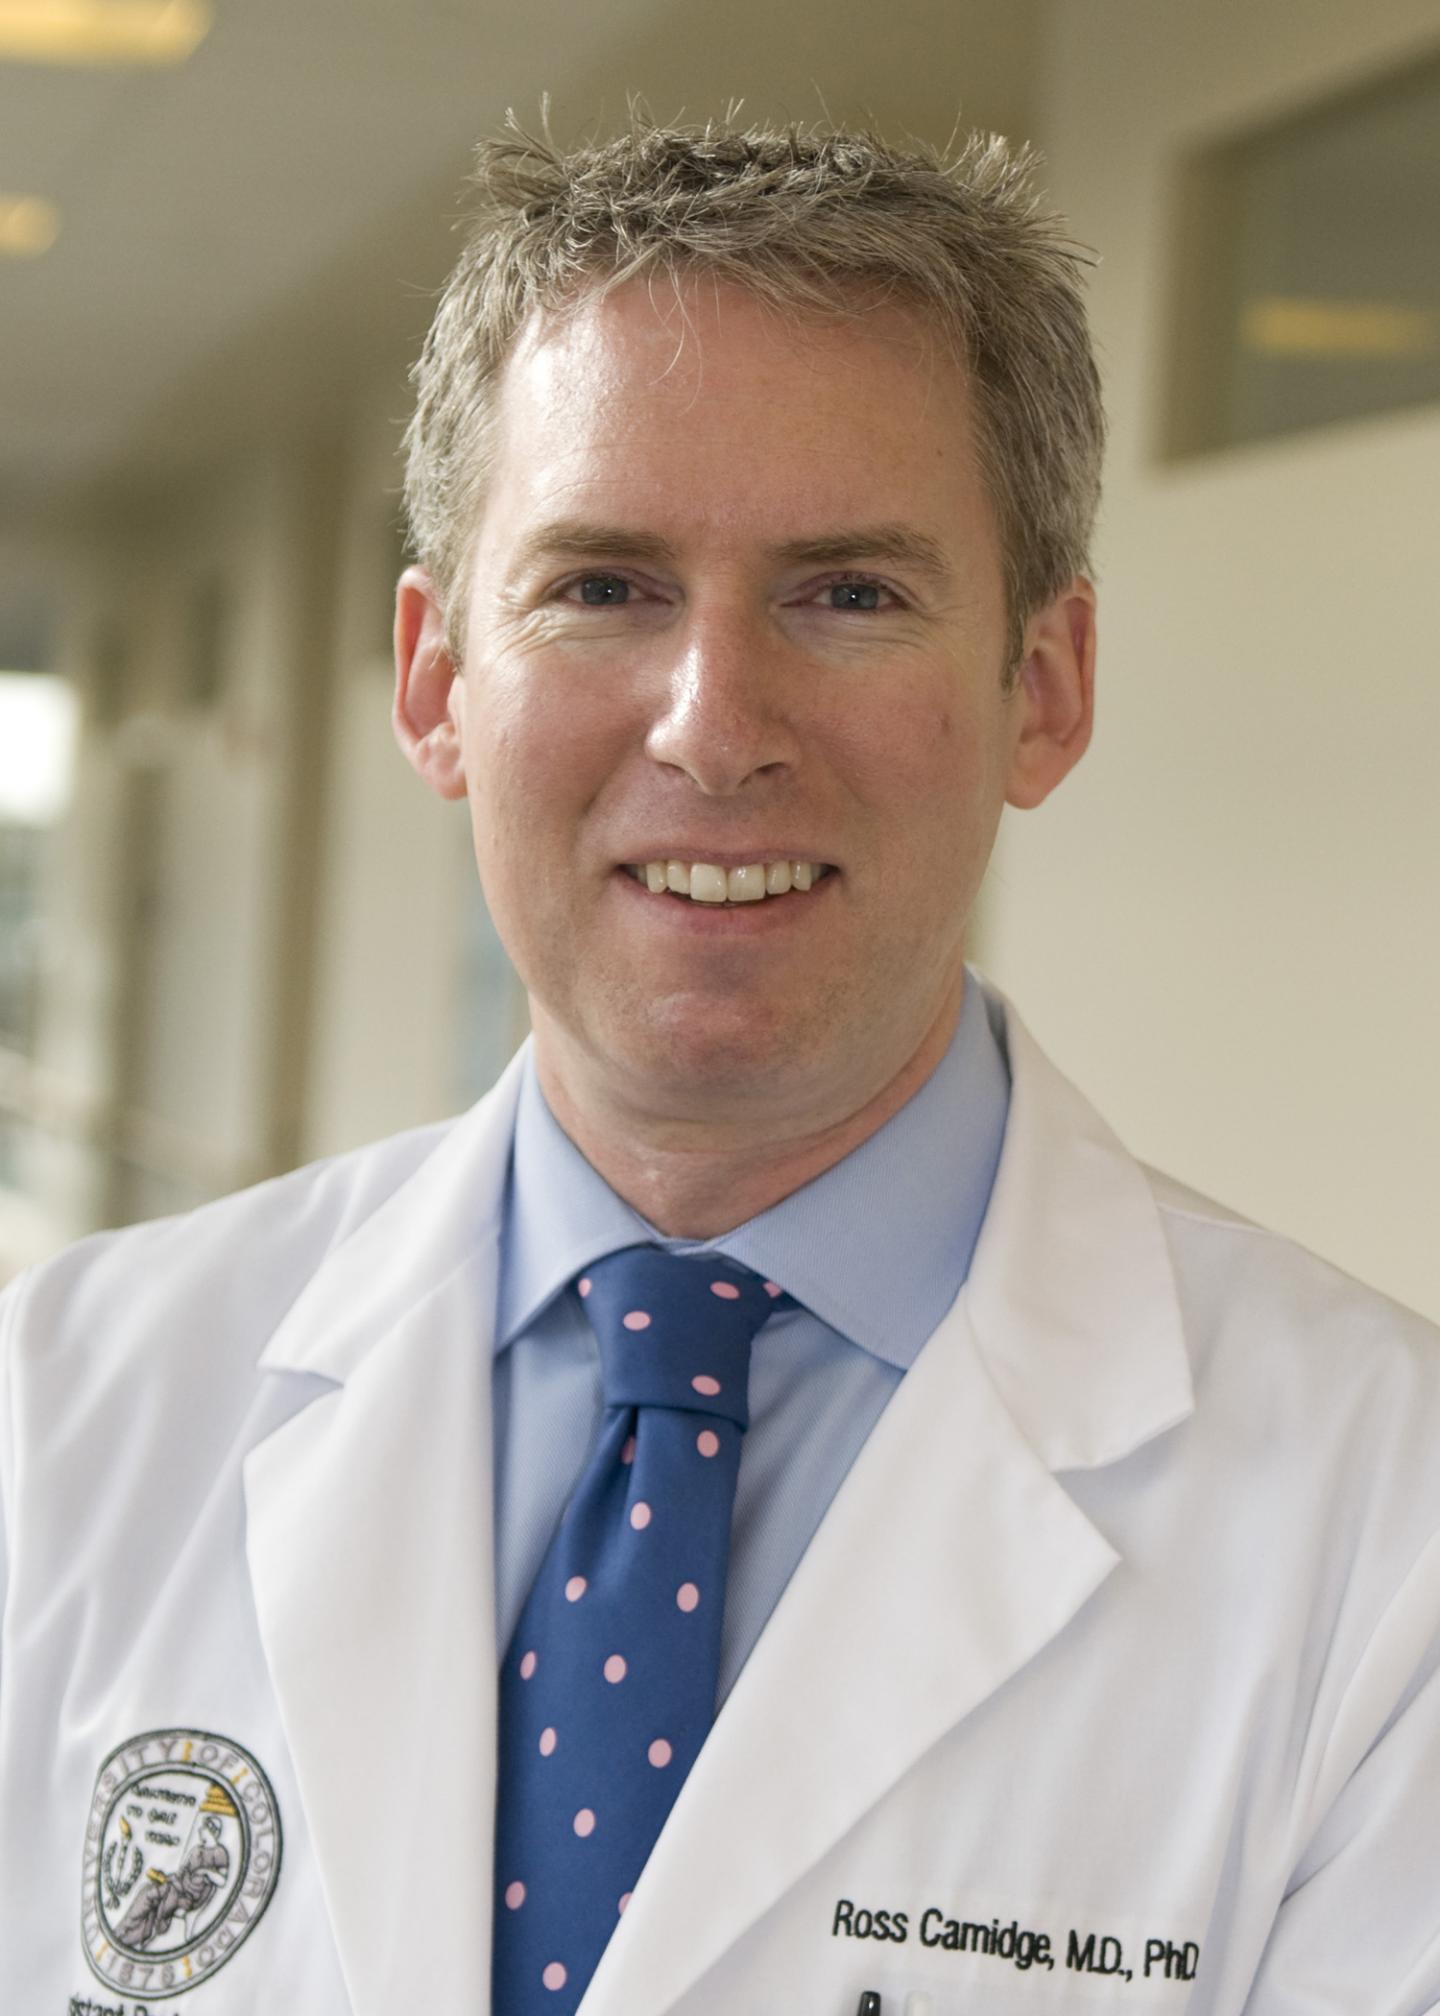 D. Ross Camidge, MD, PhD, University of Colorado Cancer Center